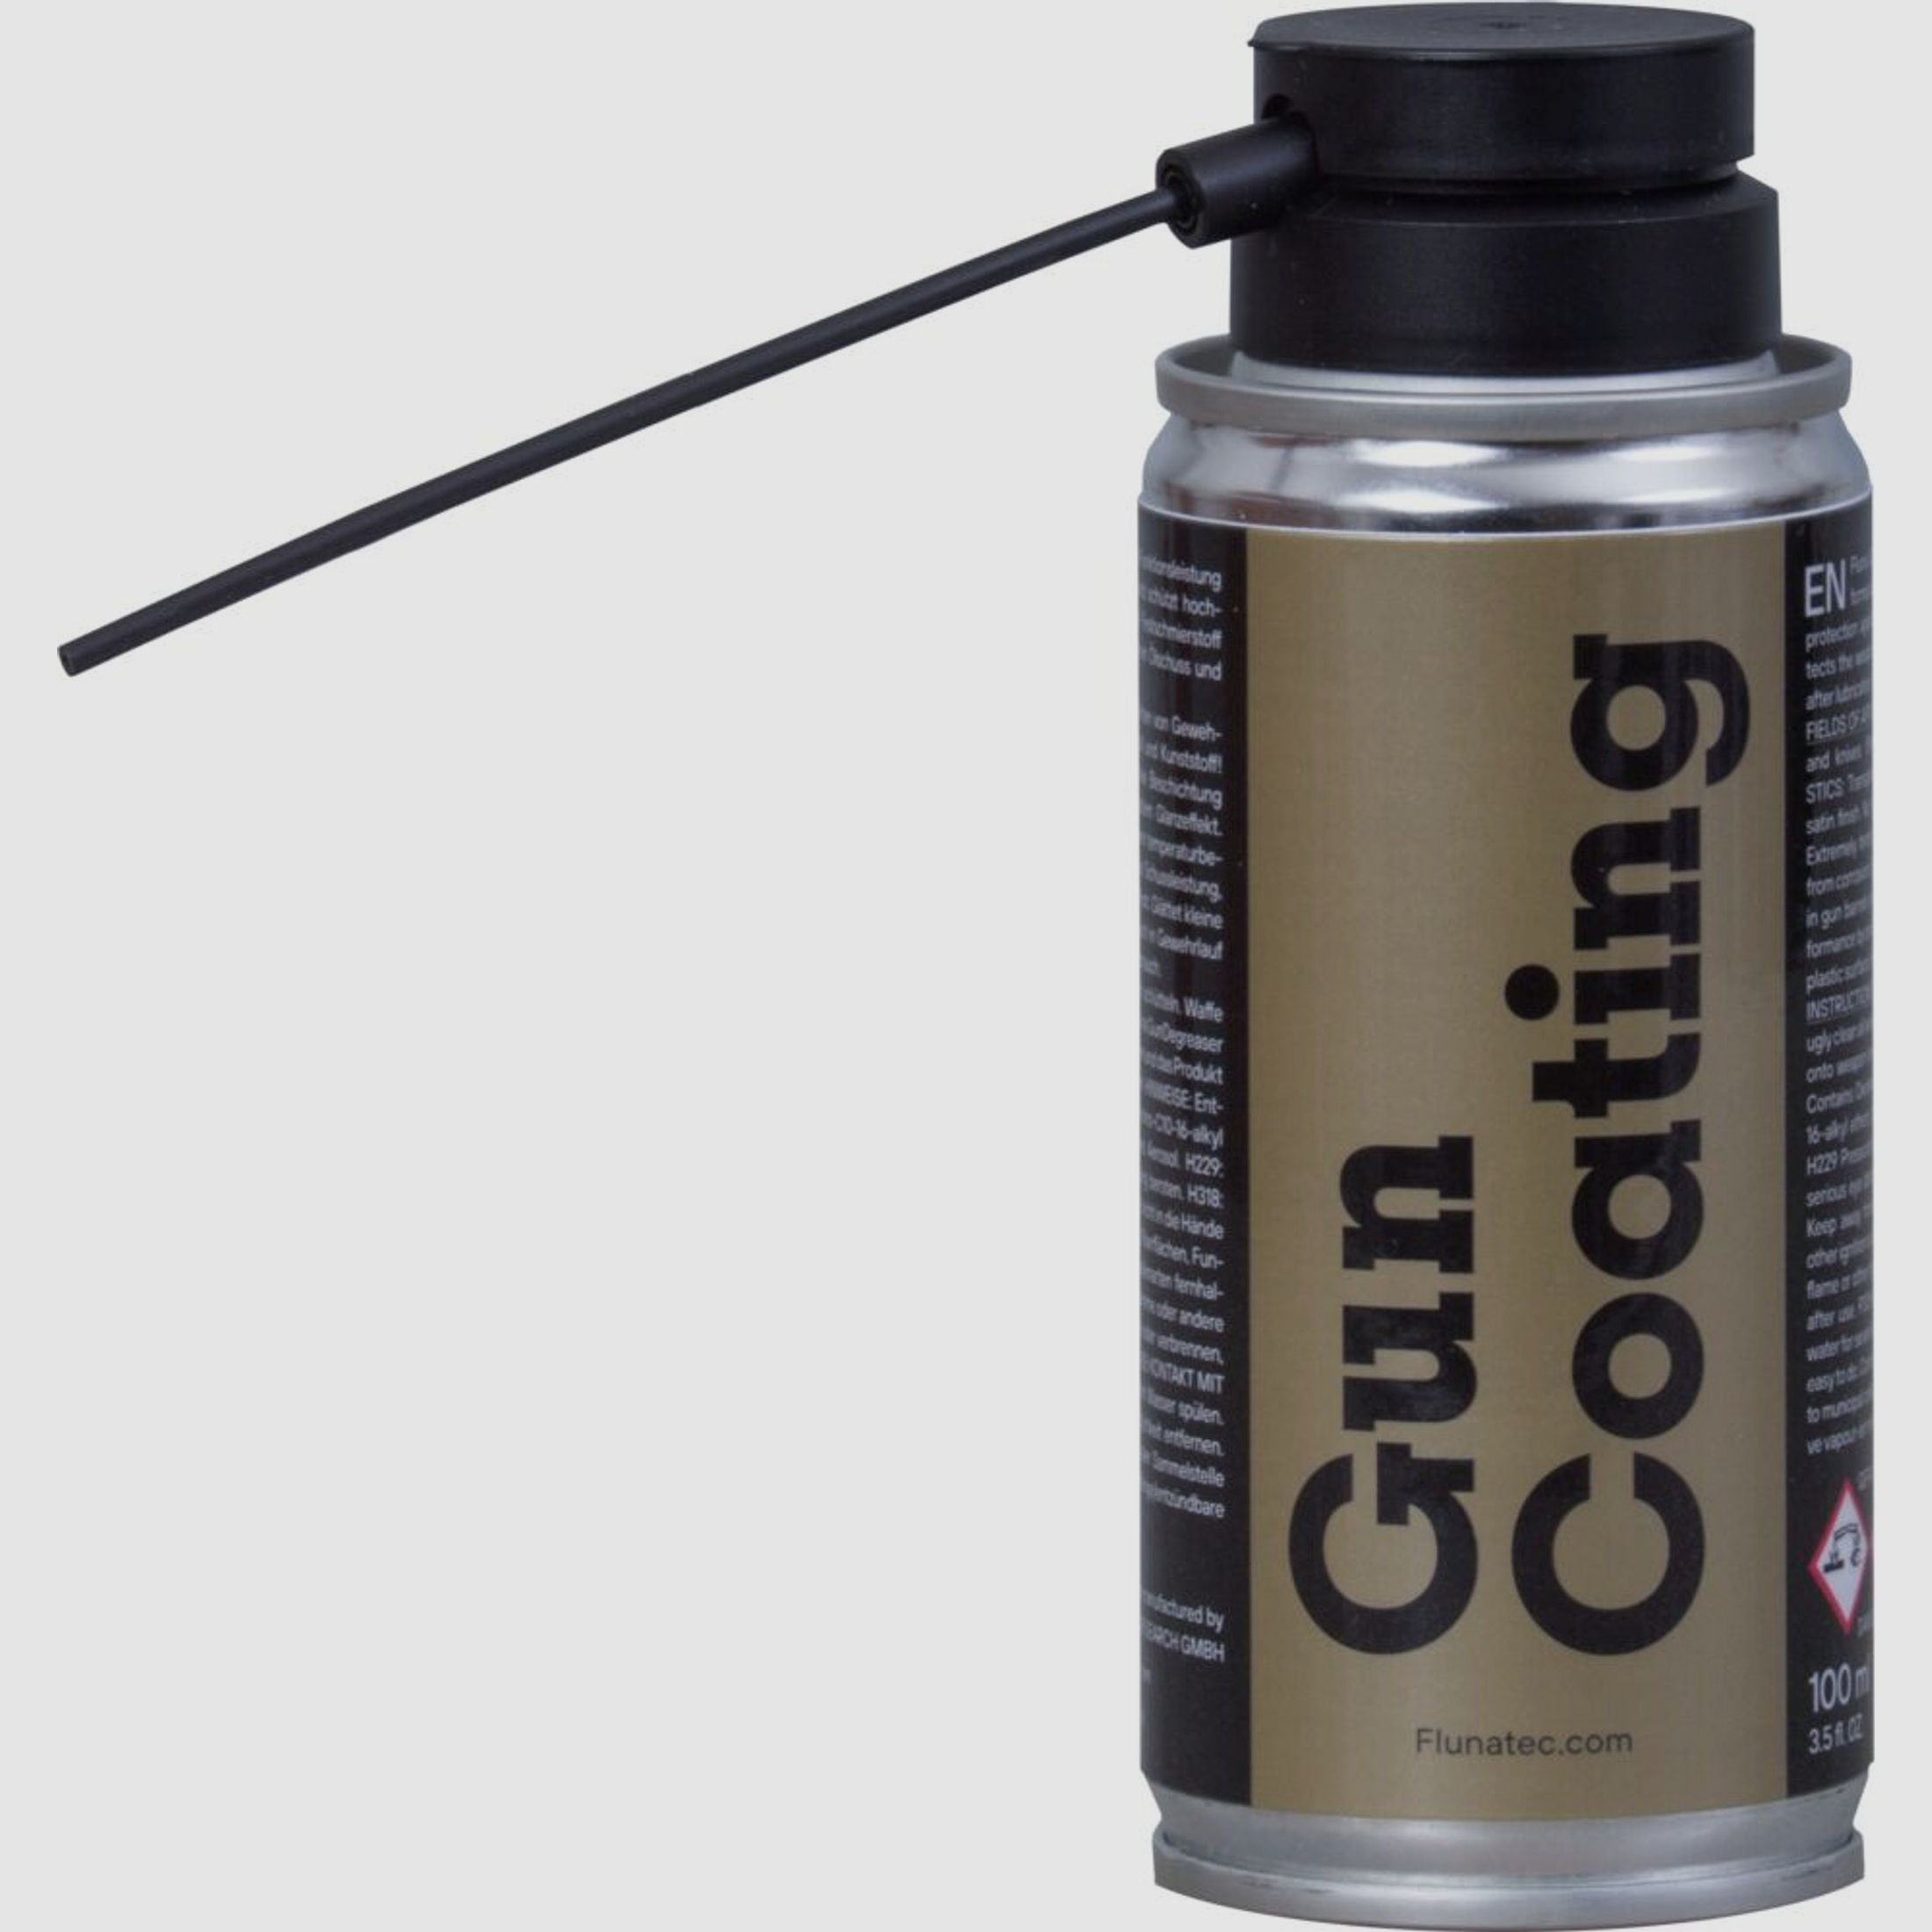 Fluna Tec Gun Coating – Spray